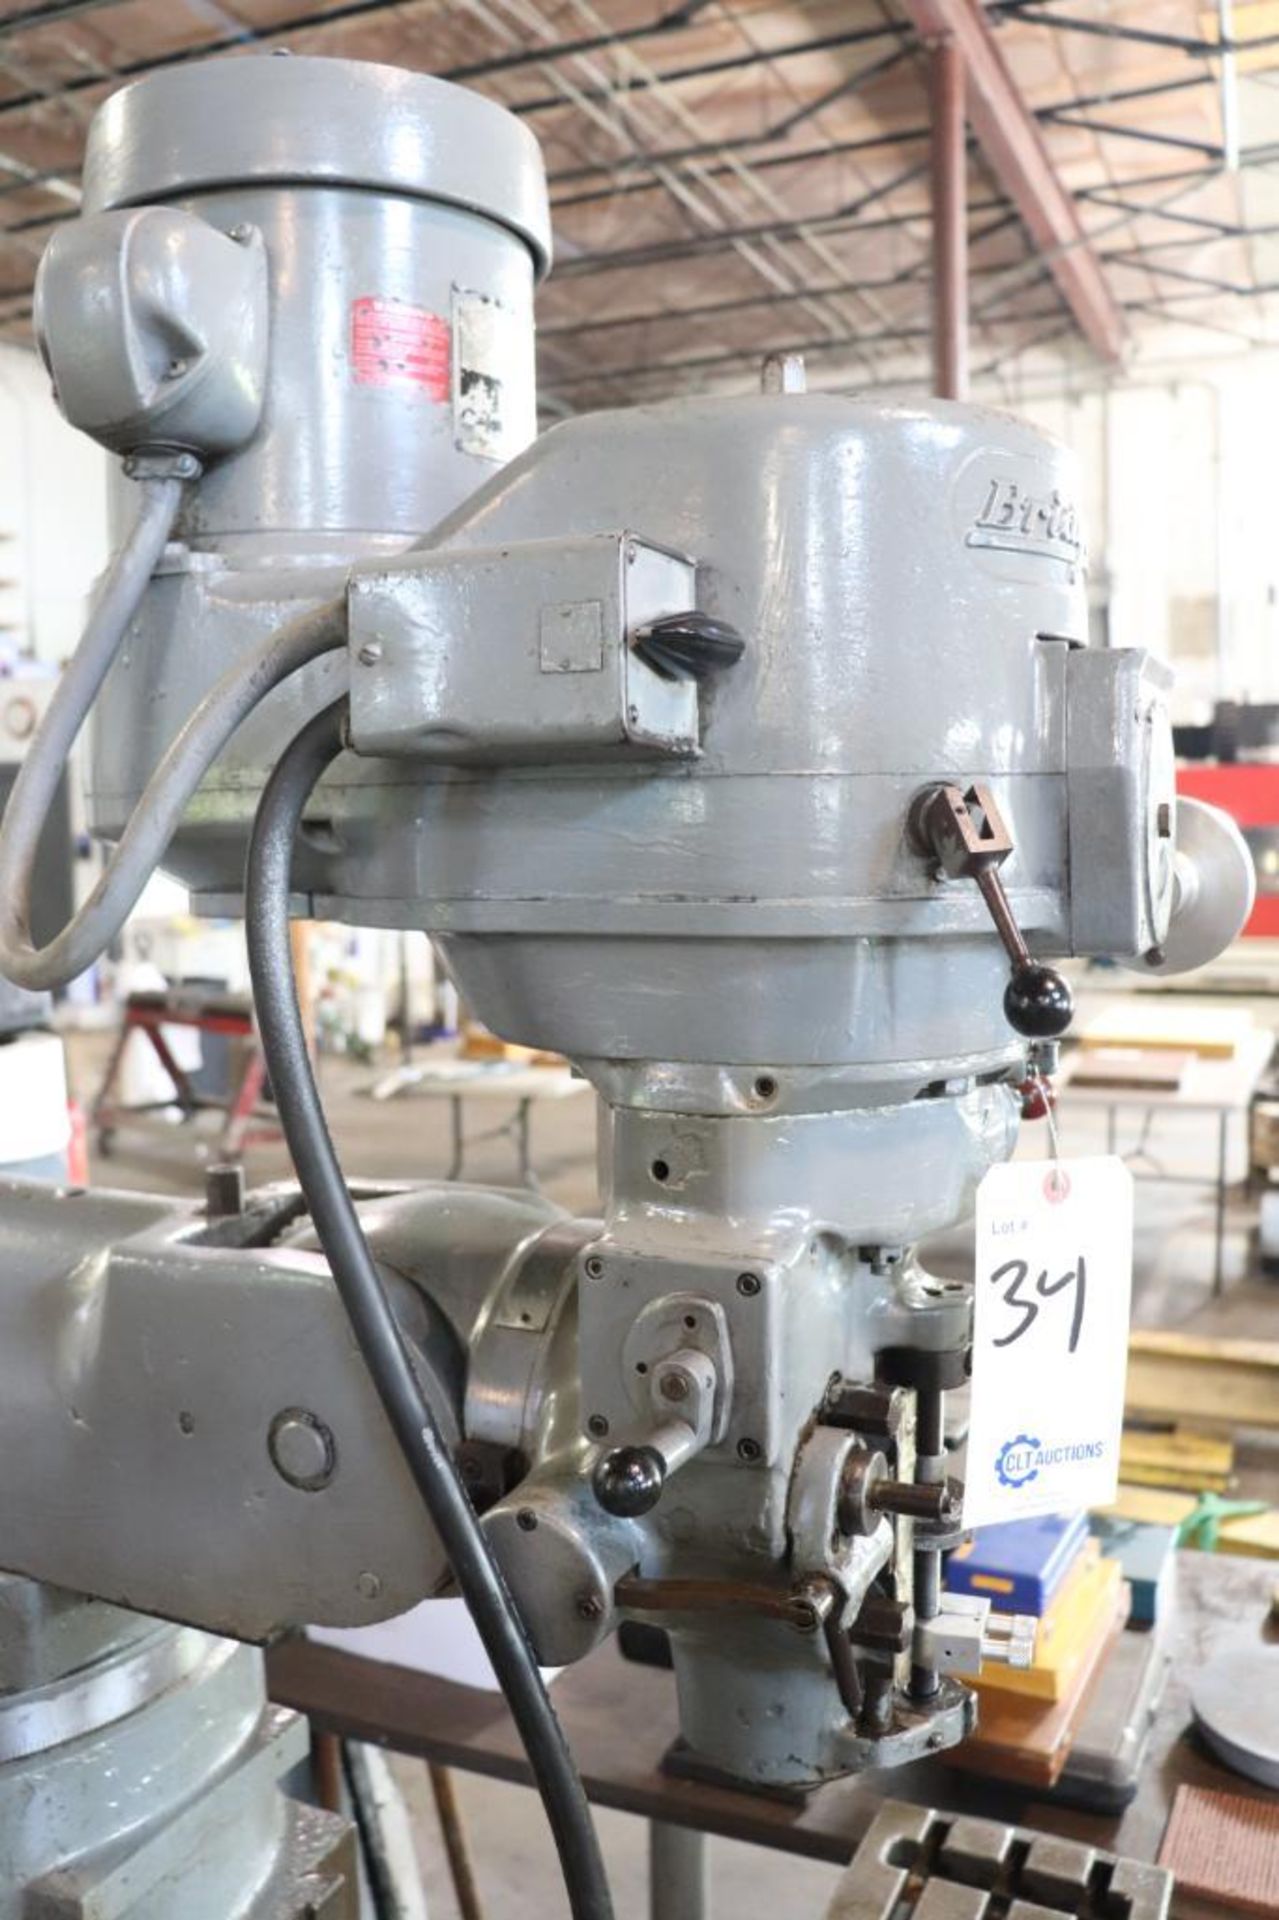 Import milling machine w/ Bridgeport head - Image 5 of 13